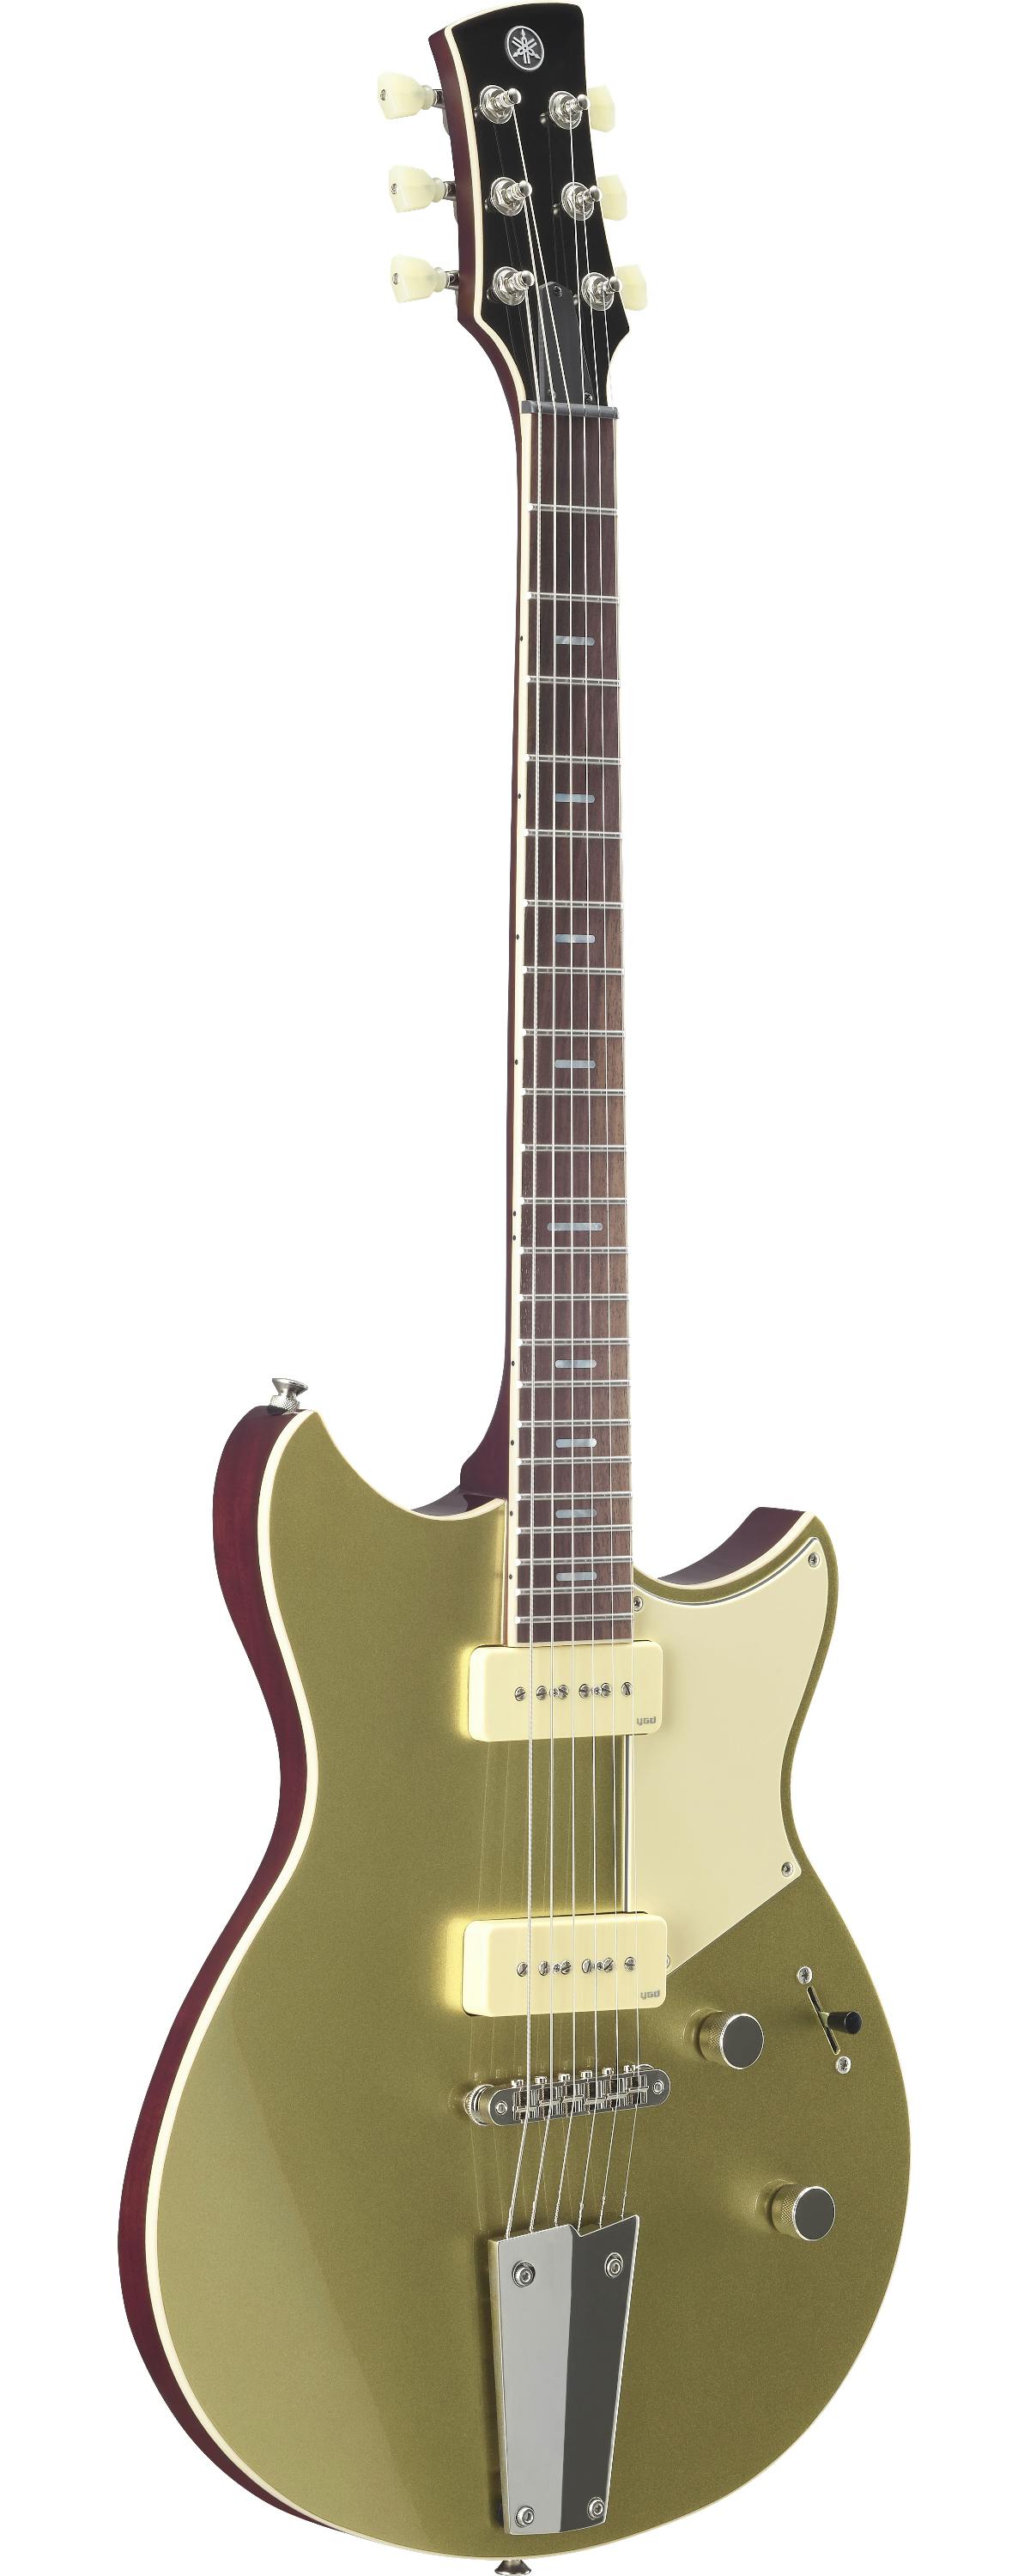 Yamaha Revstar Professional RSP02T Electric Guitar in Crisp Gold 